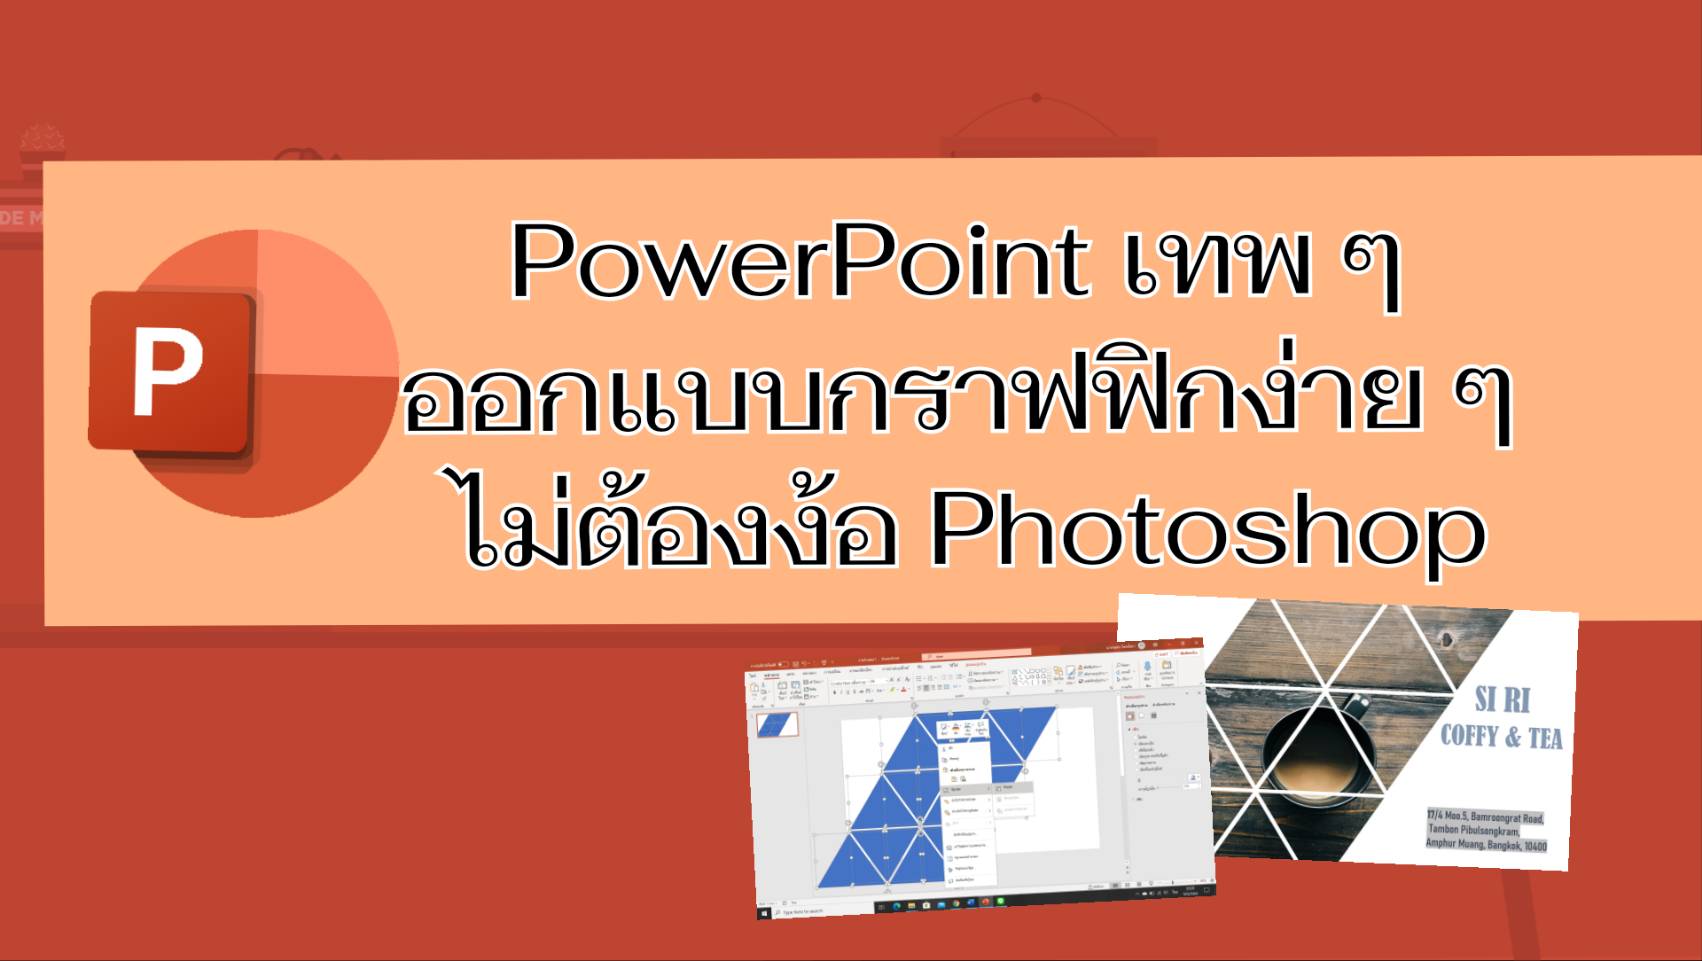 Powerpoint เทพ ๆ ออกแบบกราฟฟิกง่าย ๆ ไม่ต้องง้อ Photo Shop